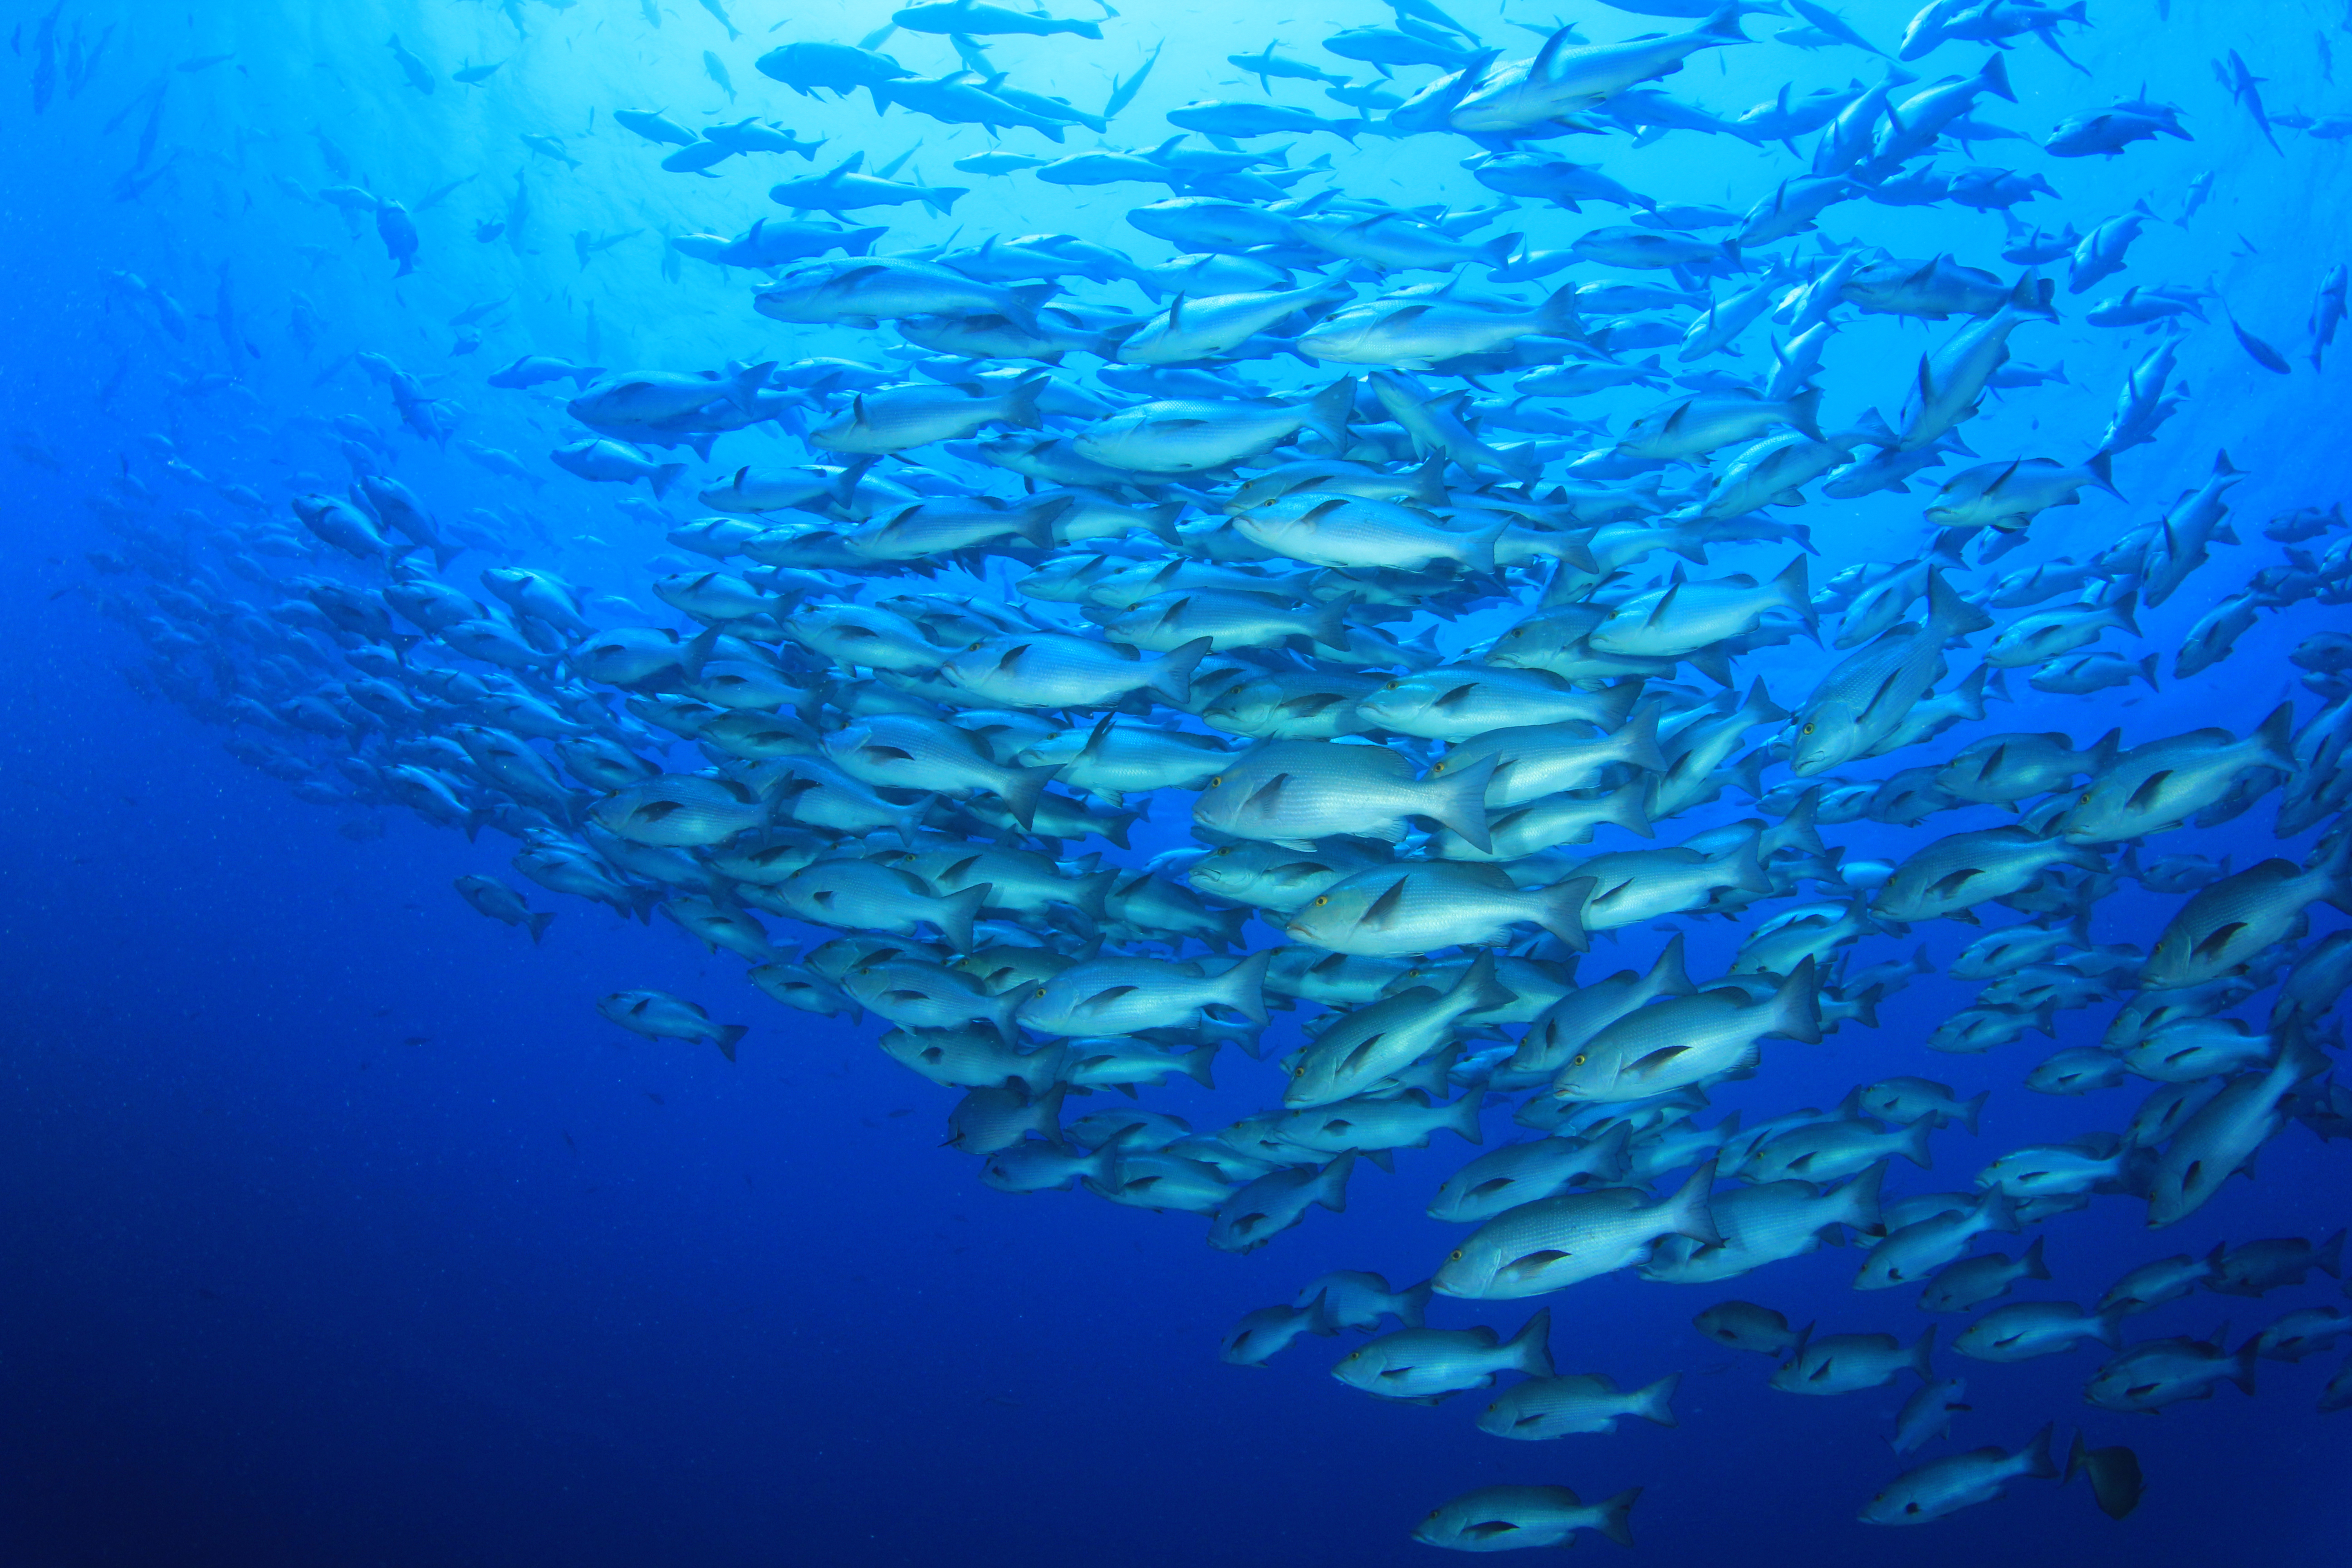 British Ecological Society image of shoal of fish